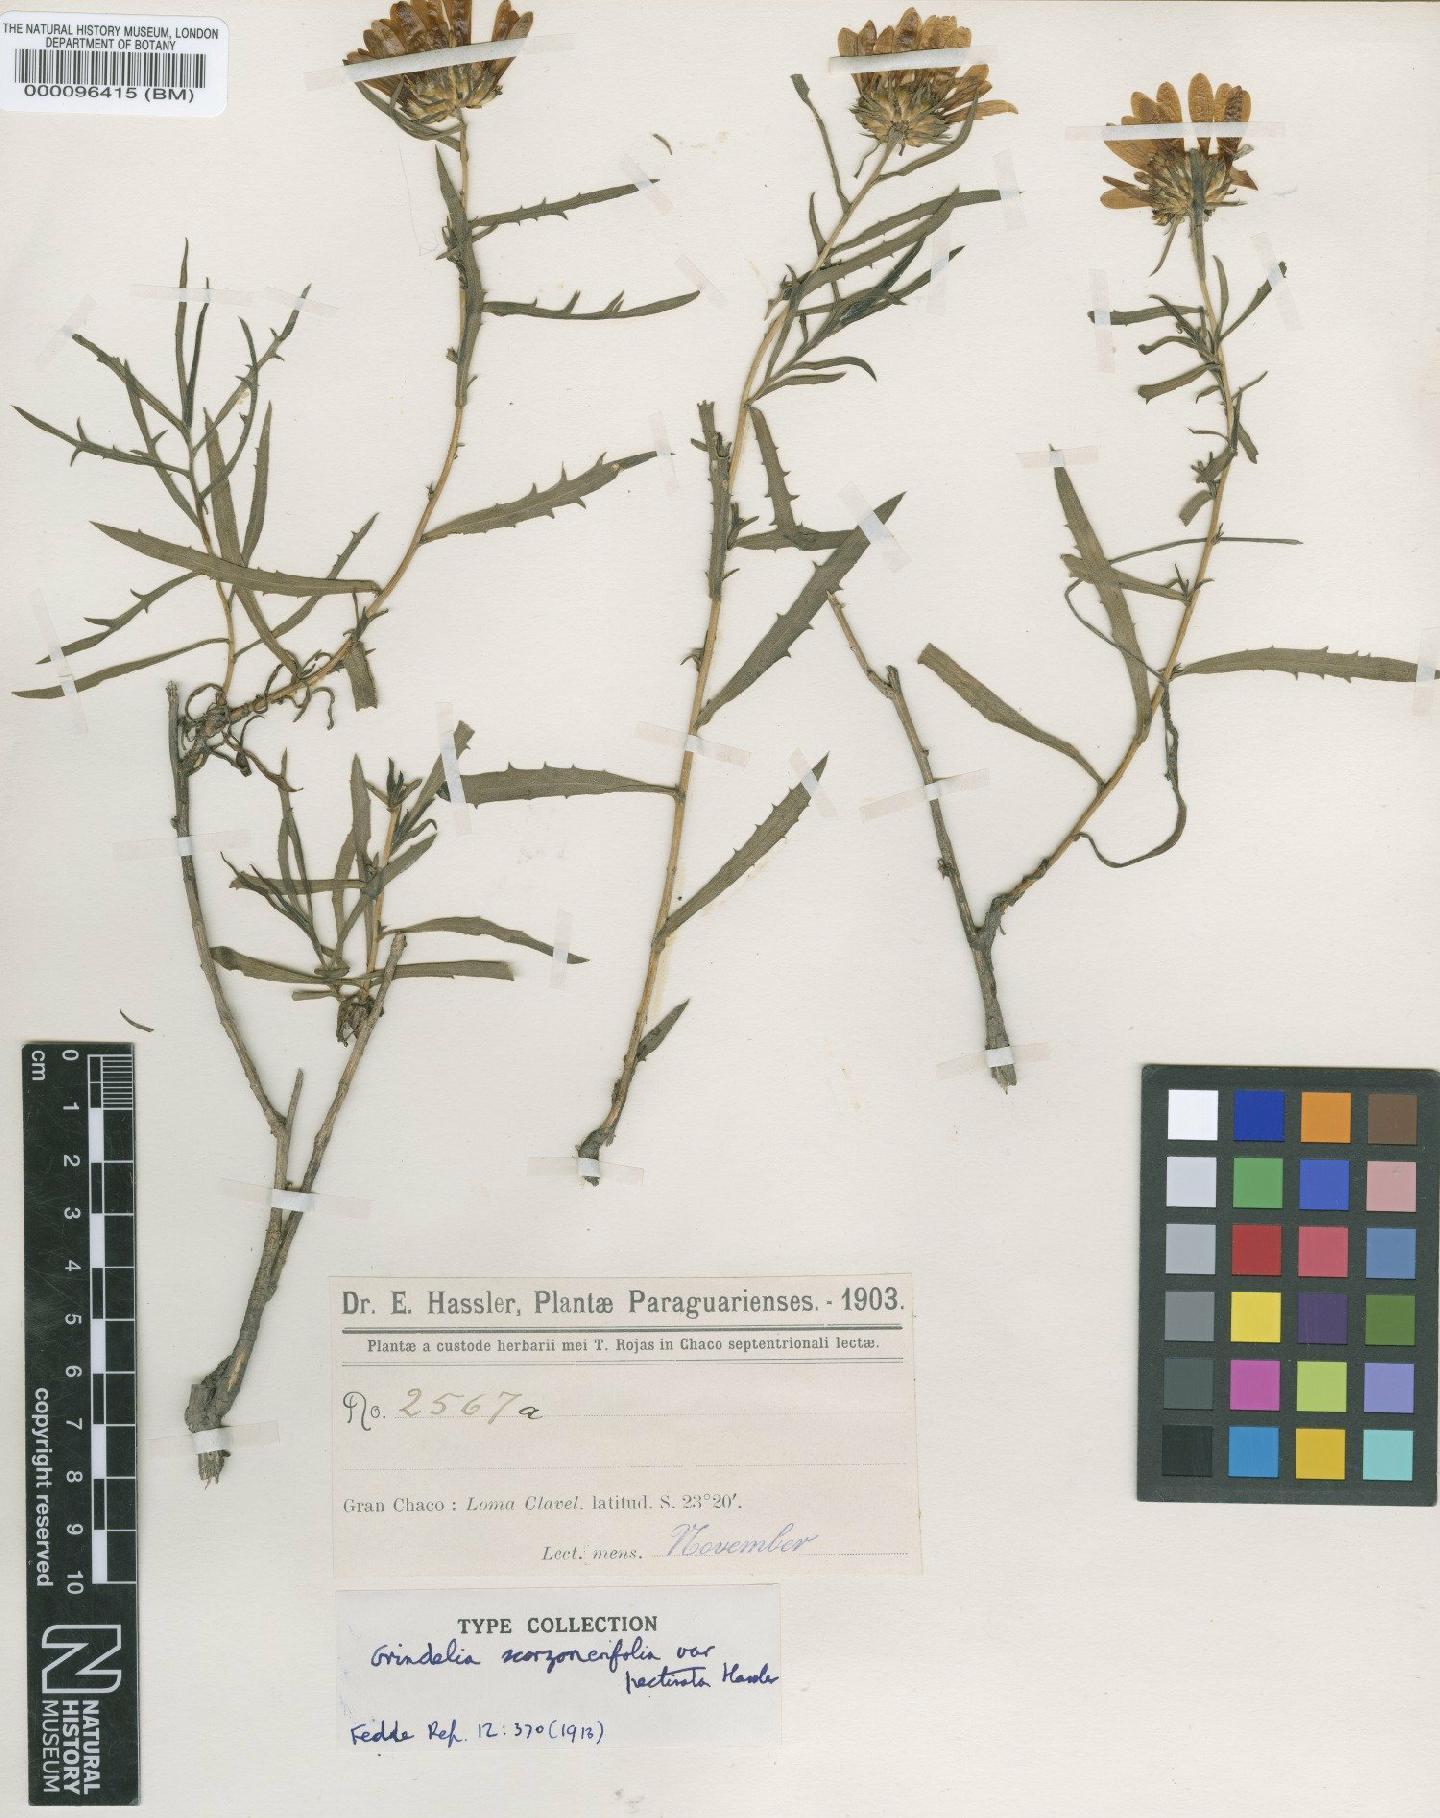 To NHMUK collection (Grindelia scorzonerifolia var. pectinata Hassl.; Type; NHMUK:ecatalogue:4567031)